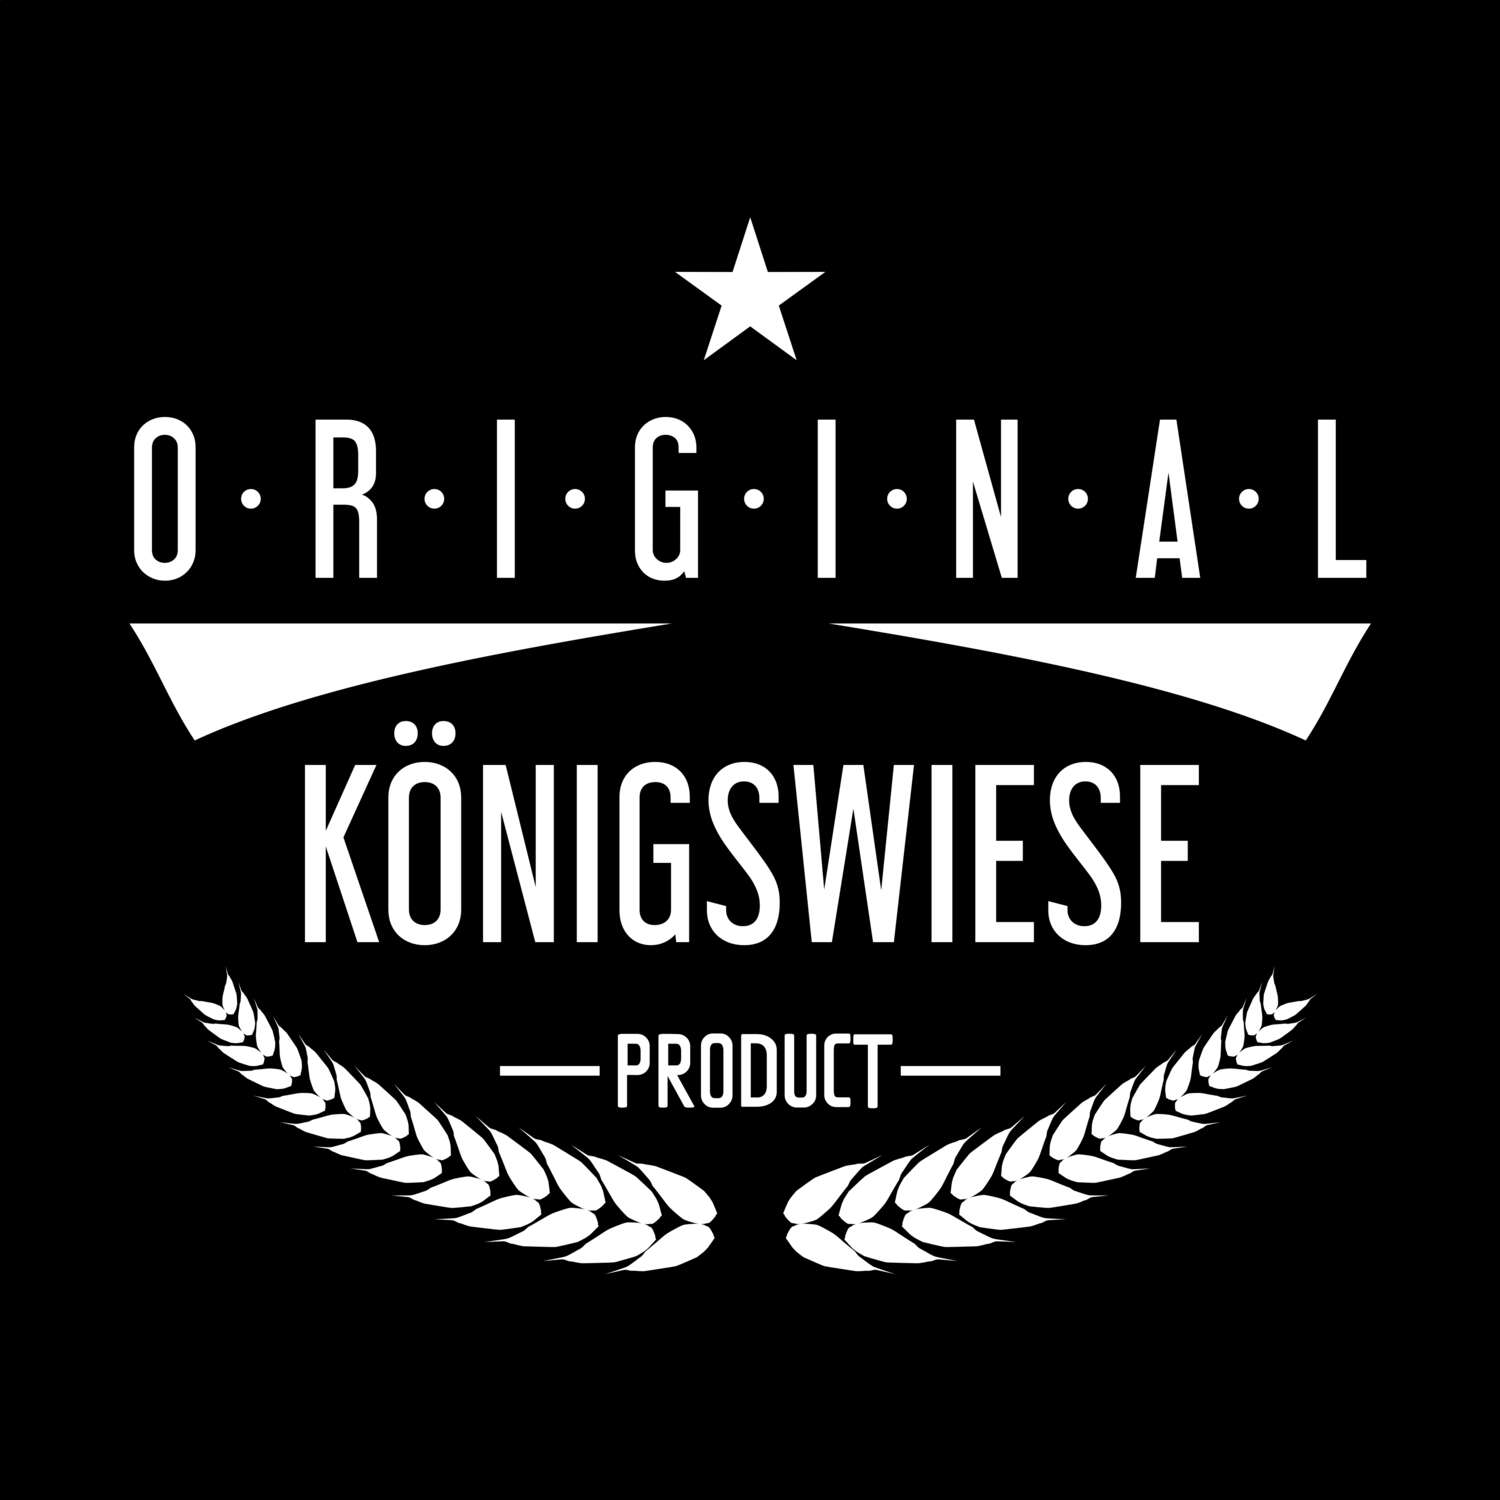 Königswiese T-Shirt »Original Product«